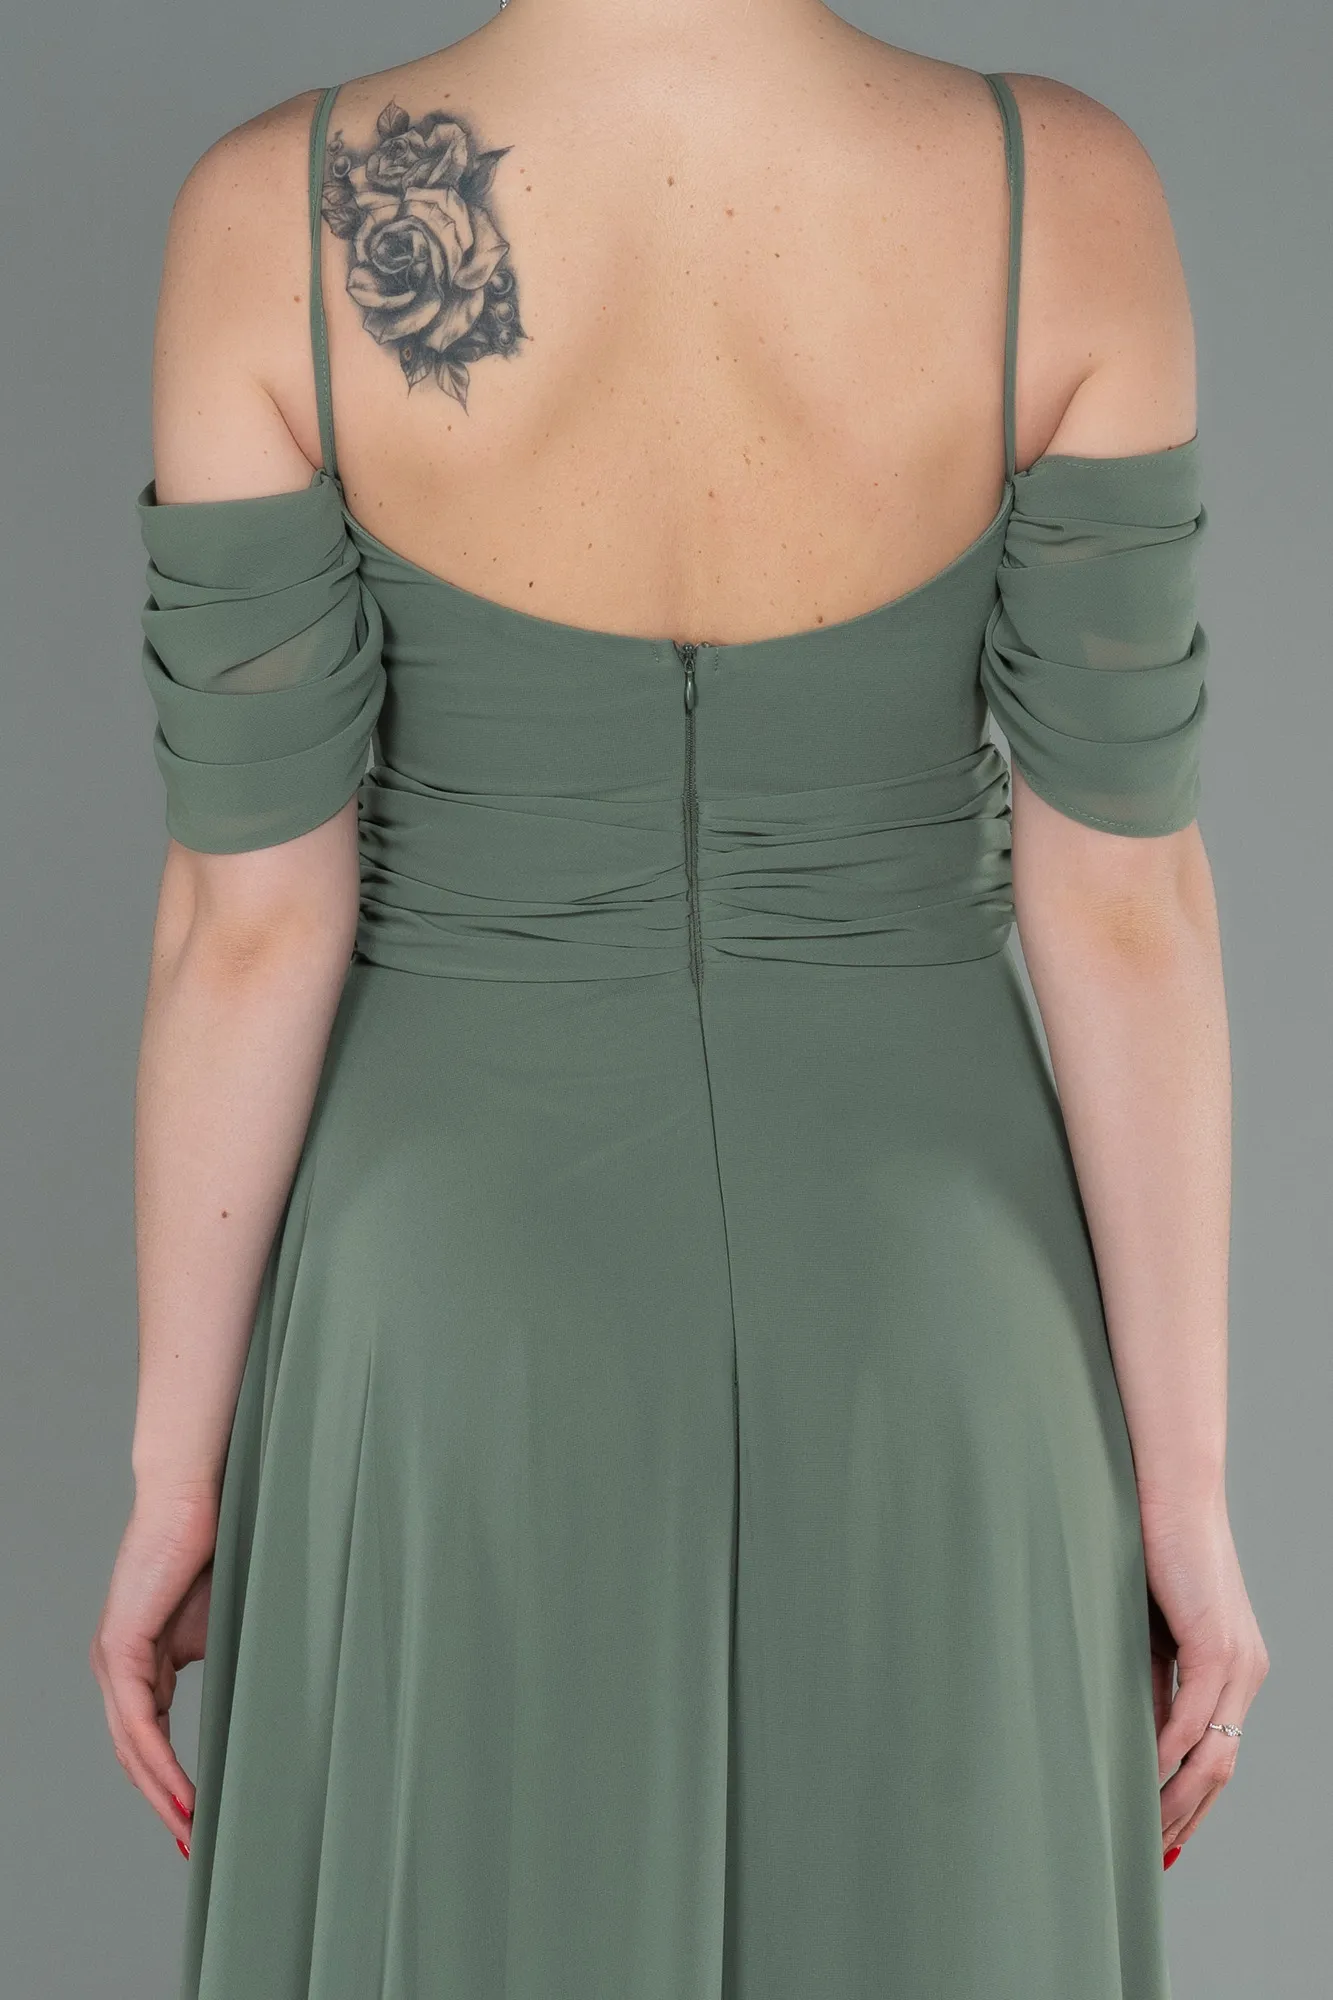 Olive Drab-Long Chiffon Evening Dress ABU3093